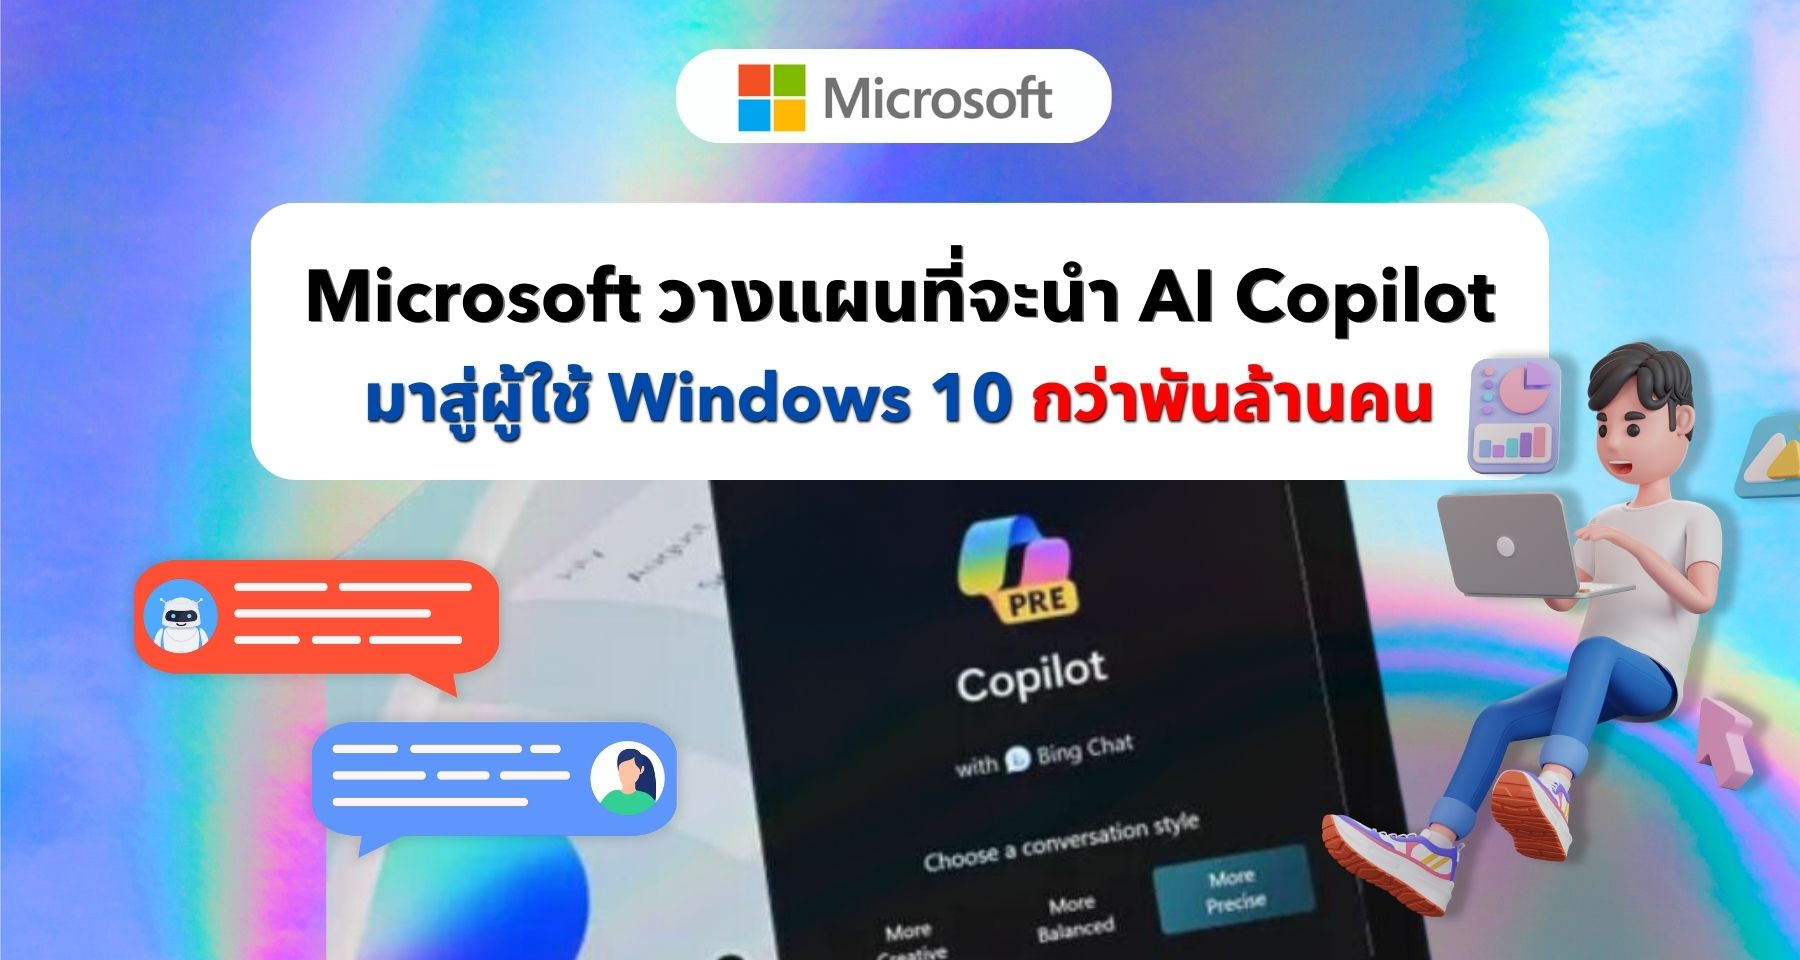 Microsoft วางแผนที่จะนำ AI Copilot มาสู่ผู้ใช้ Windows 10 กว่าพันล้านคน